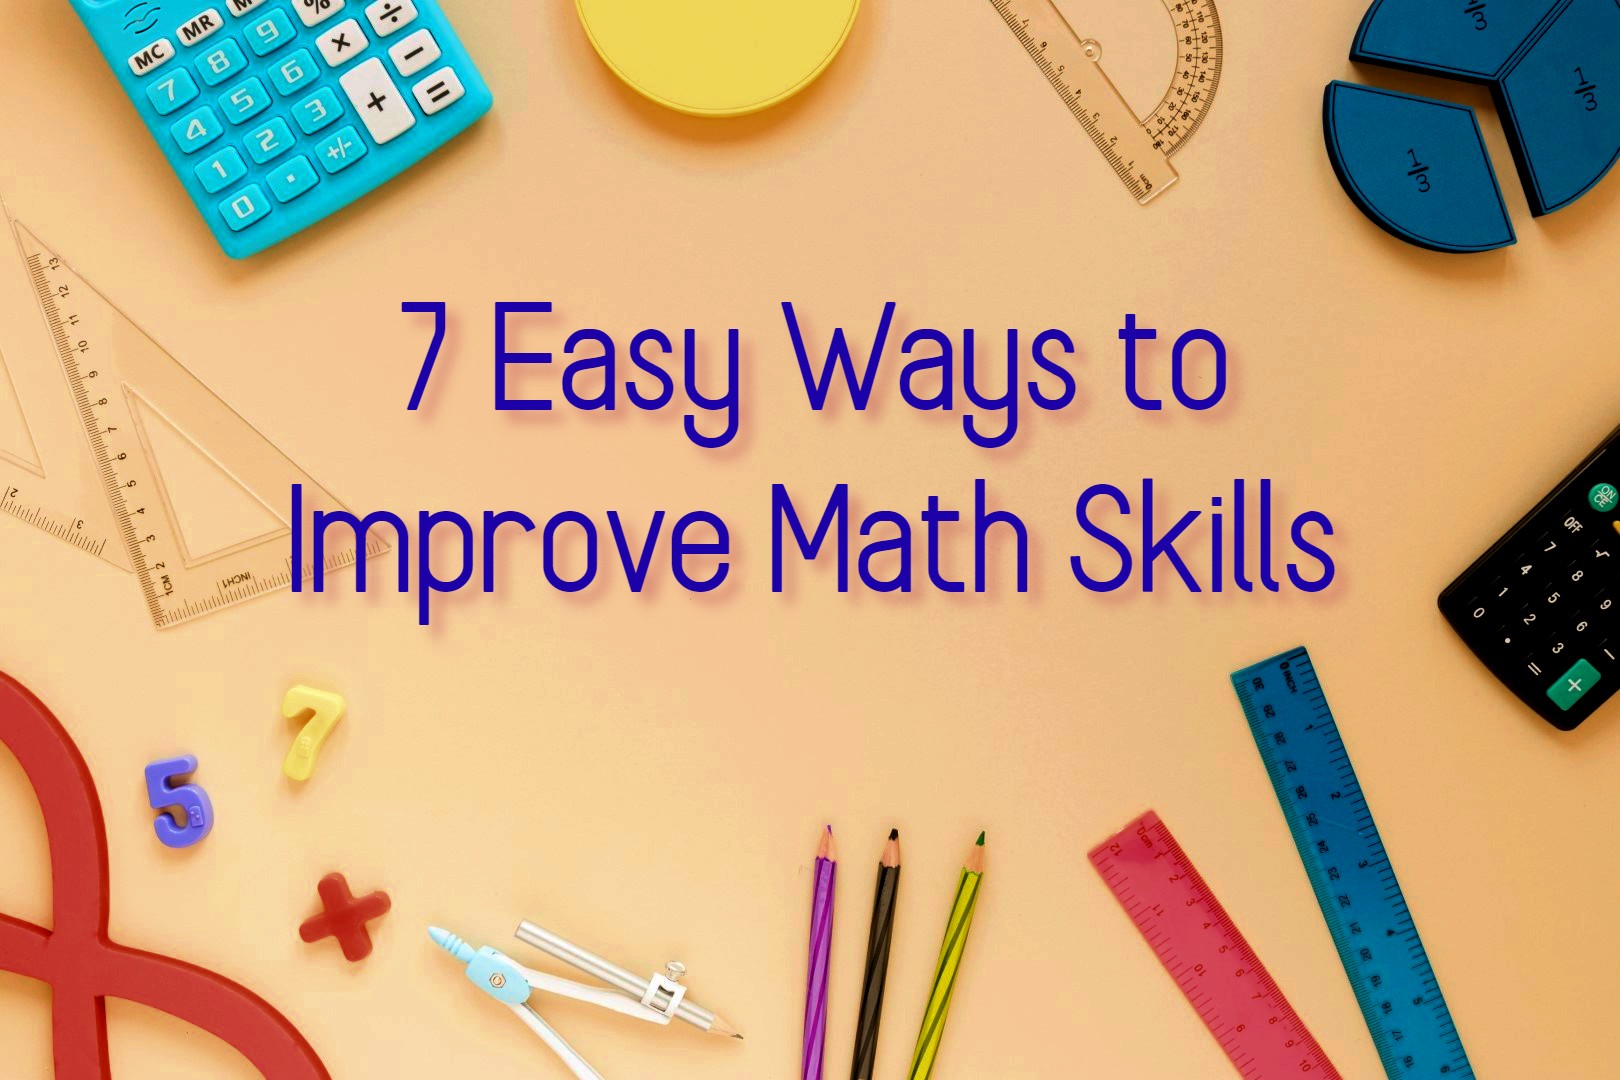 How to Improve Math Skills